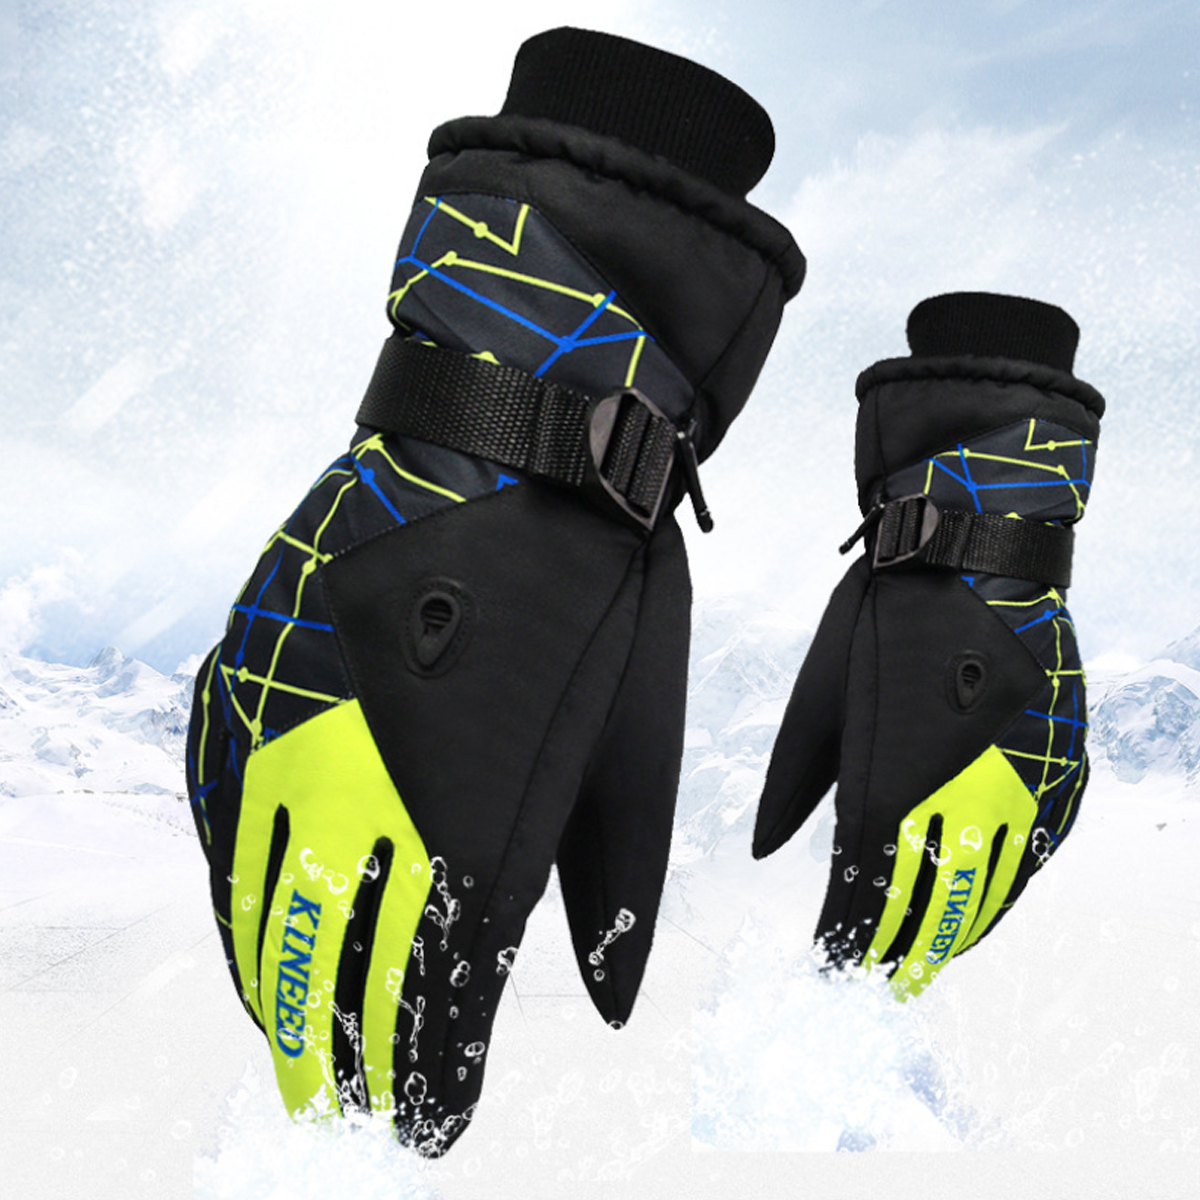 Mens-Winter-Skiing-Gloves-Waterproof-Thermal-Warm-Snowboard-Running-Bike-Ski-Mittens-1620318-4